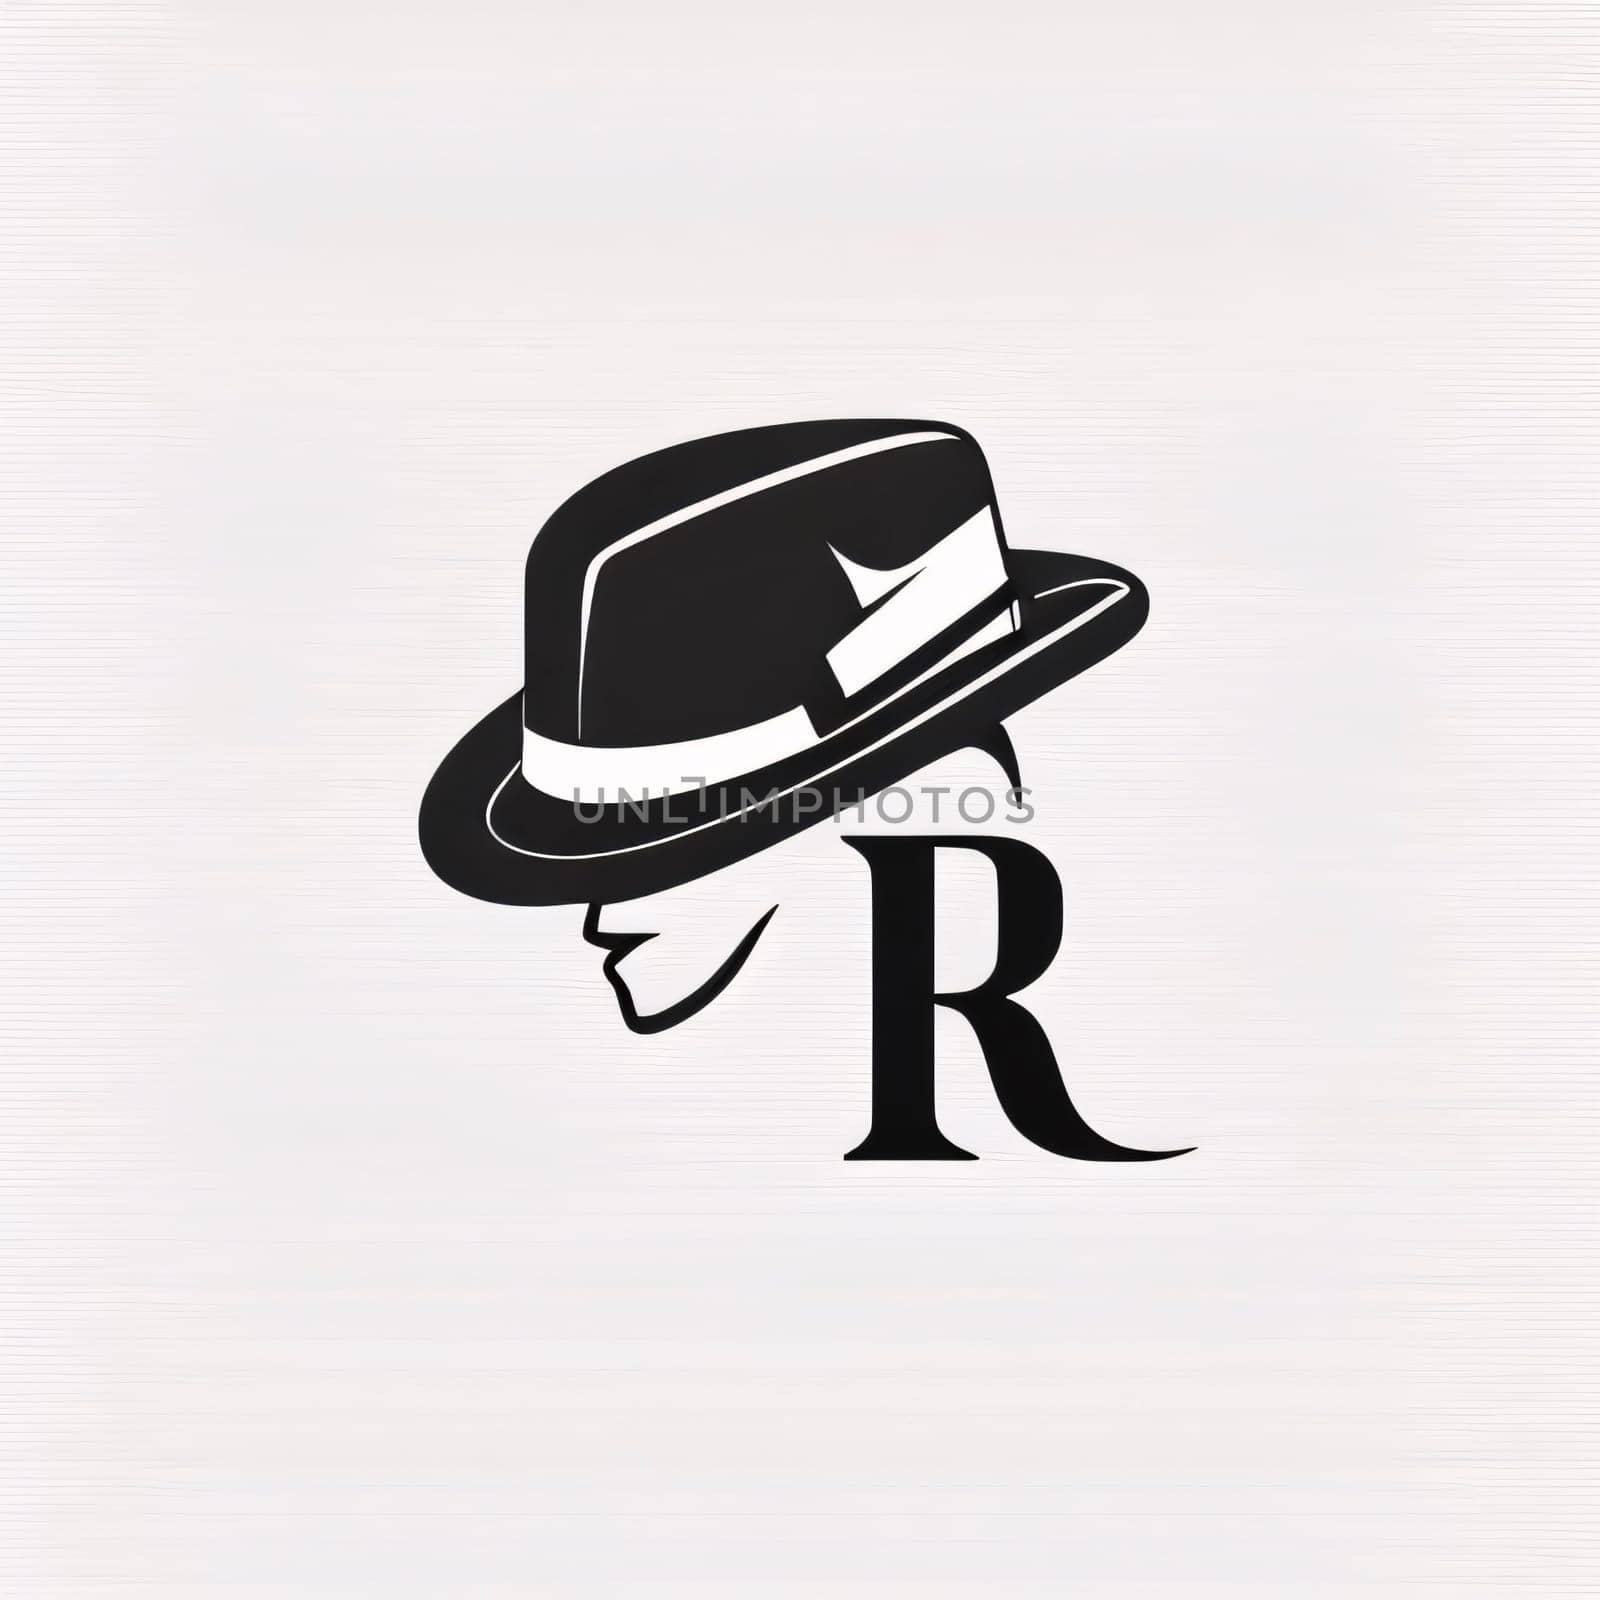 Graphic alphabet letters: Elegant gentleman's hat and letter R. Vector illustration.